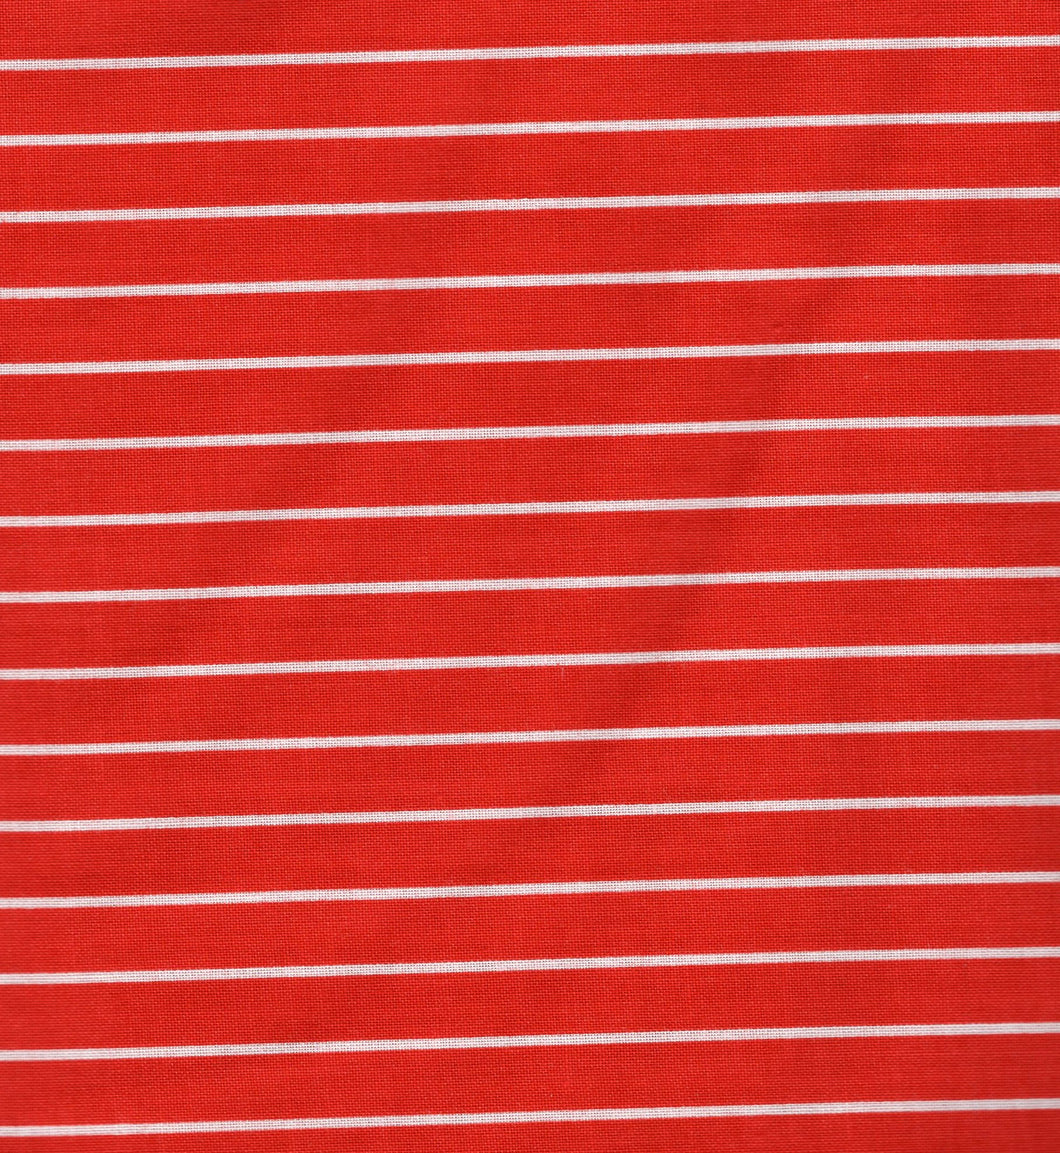 Jazz Club Thin White / Red str356